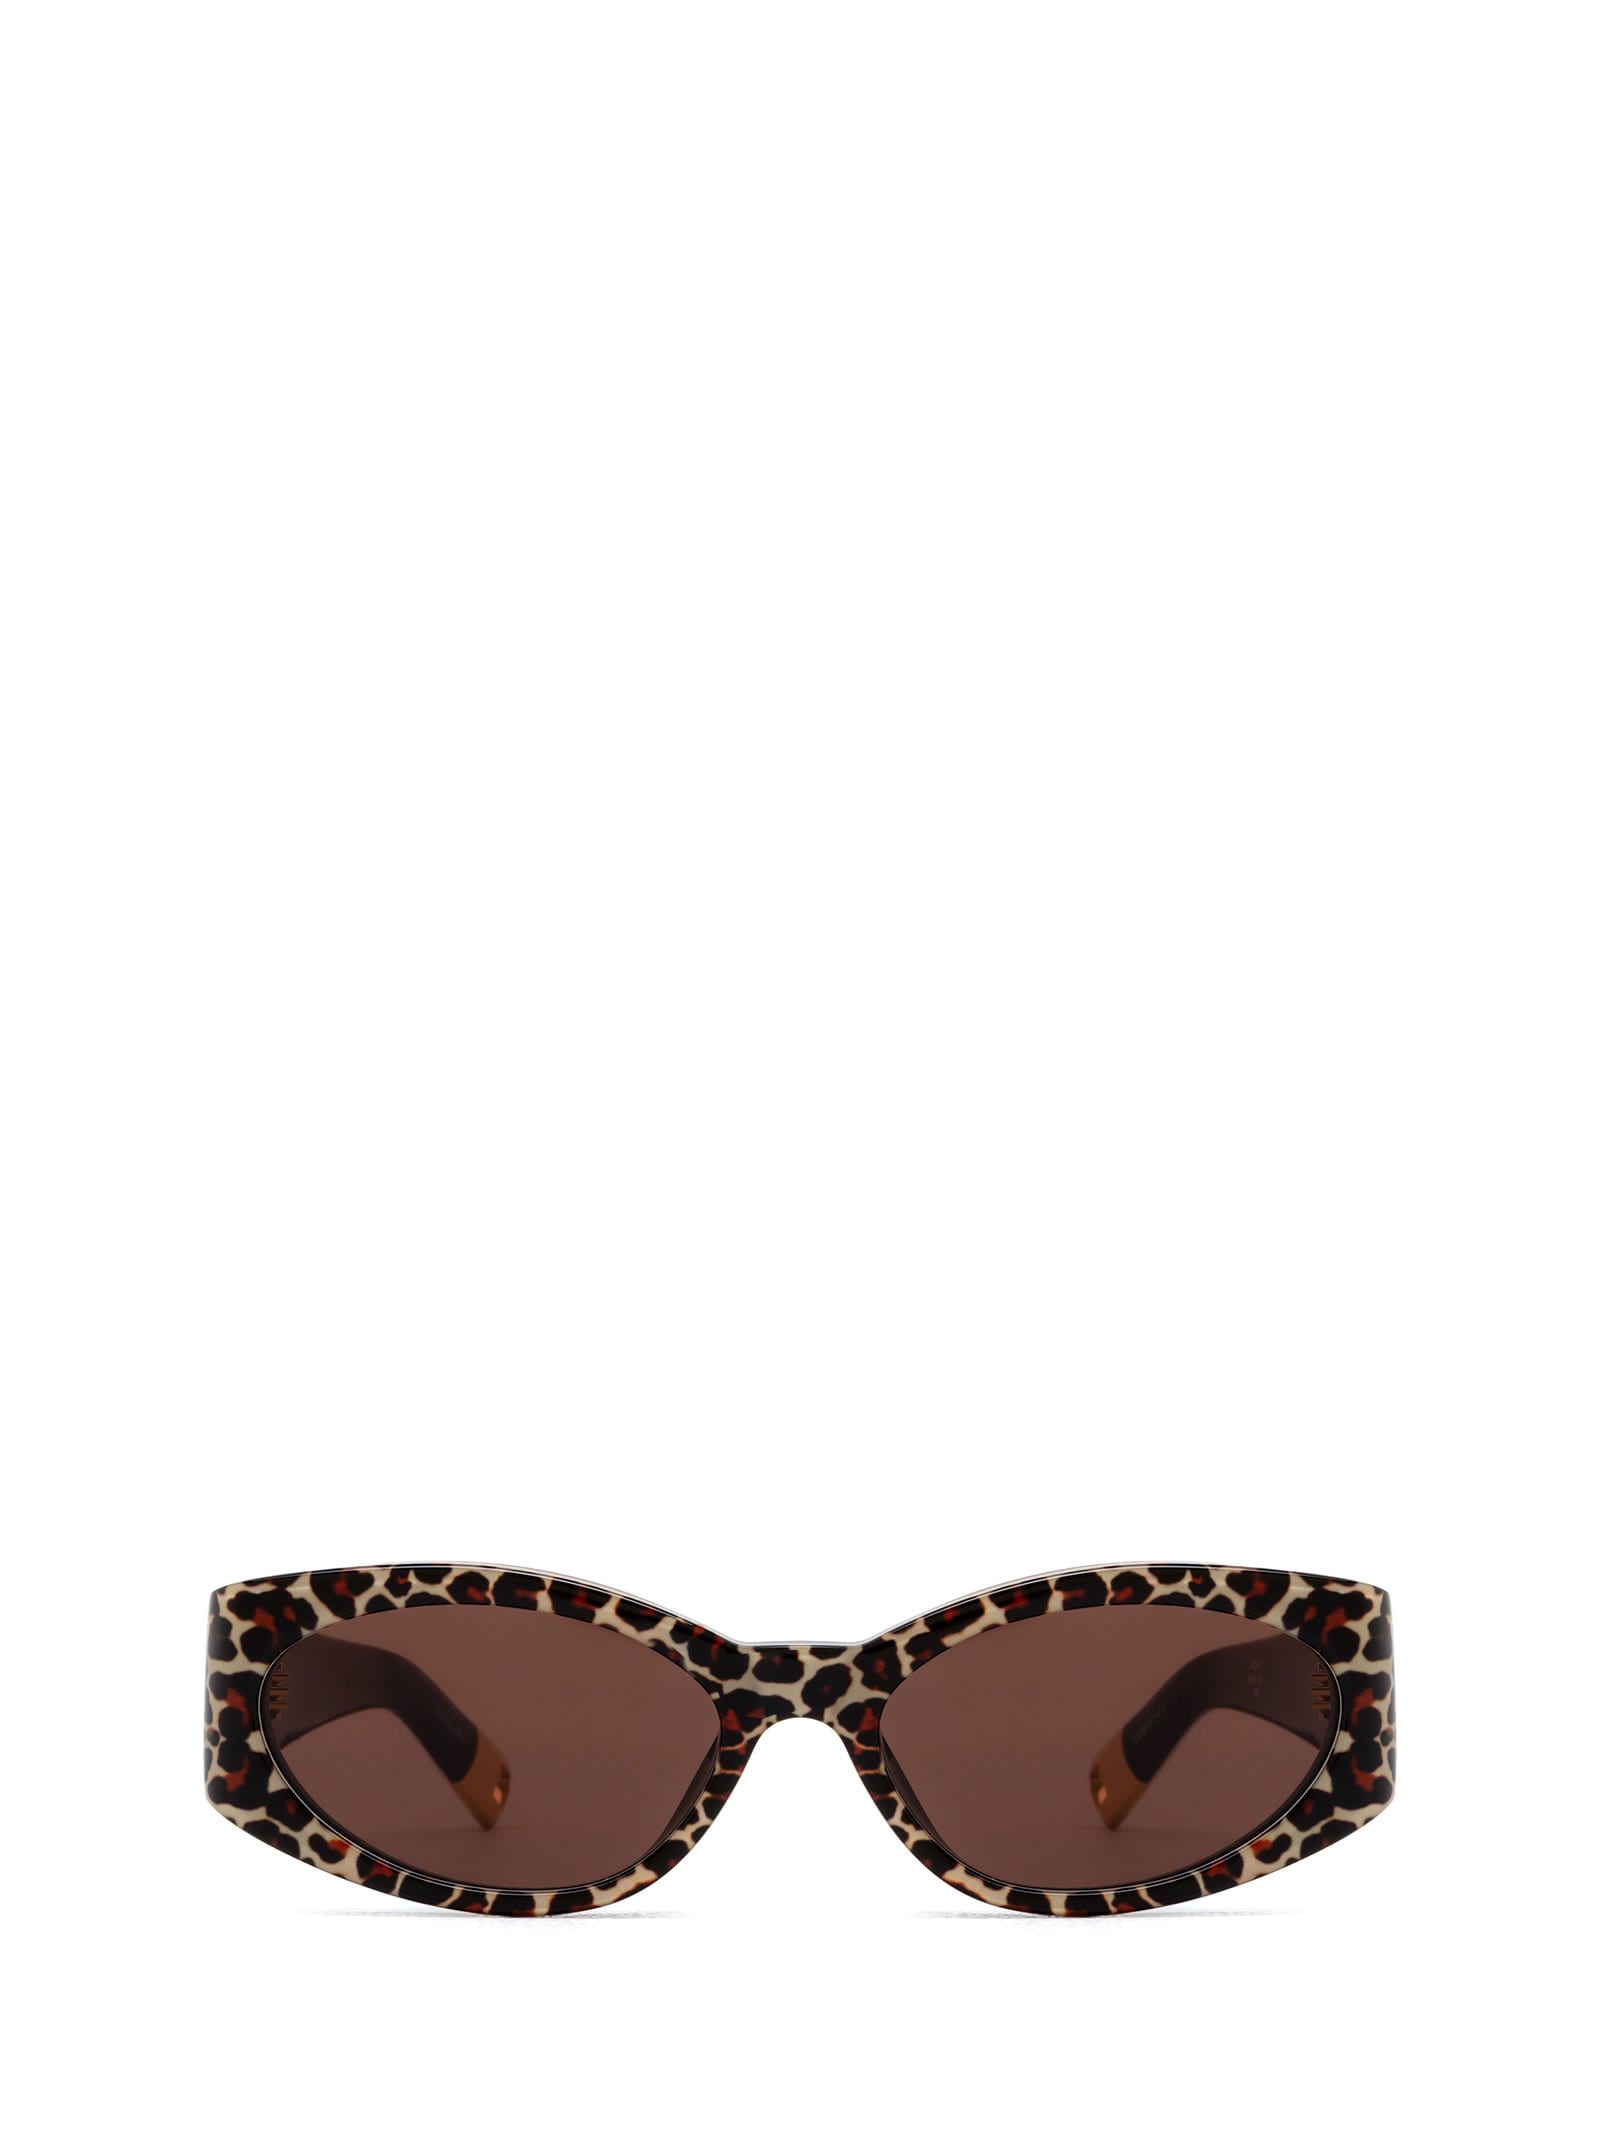 Jac4 Leopard Glasses